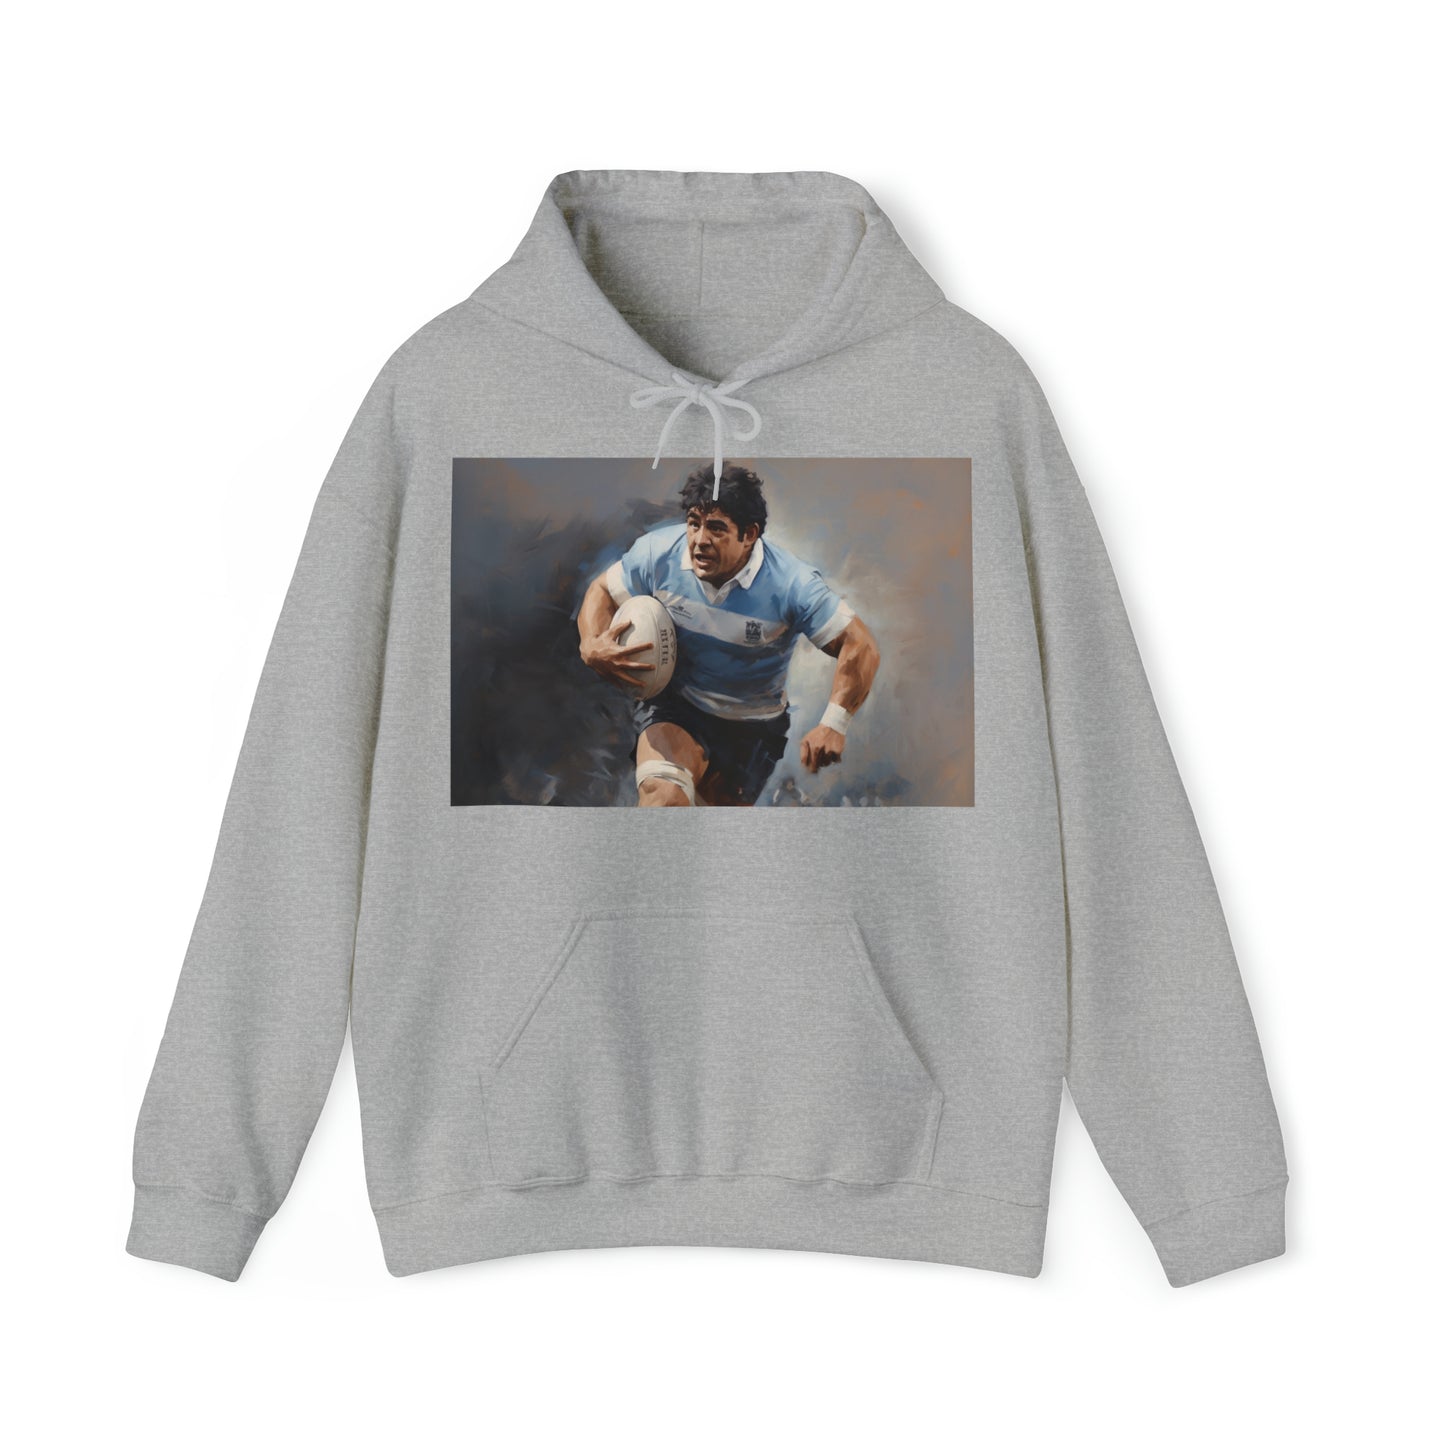 Rugby Maradona - light hoodies